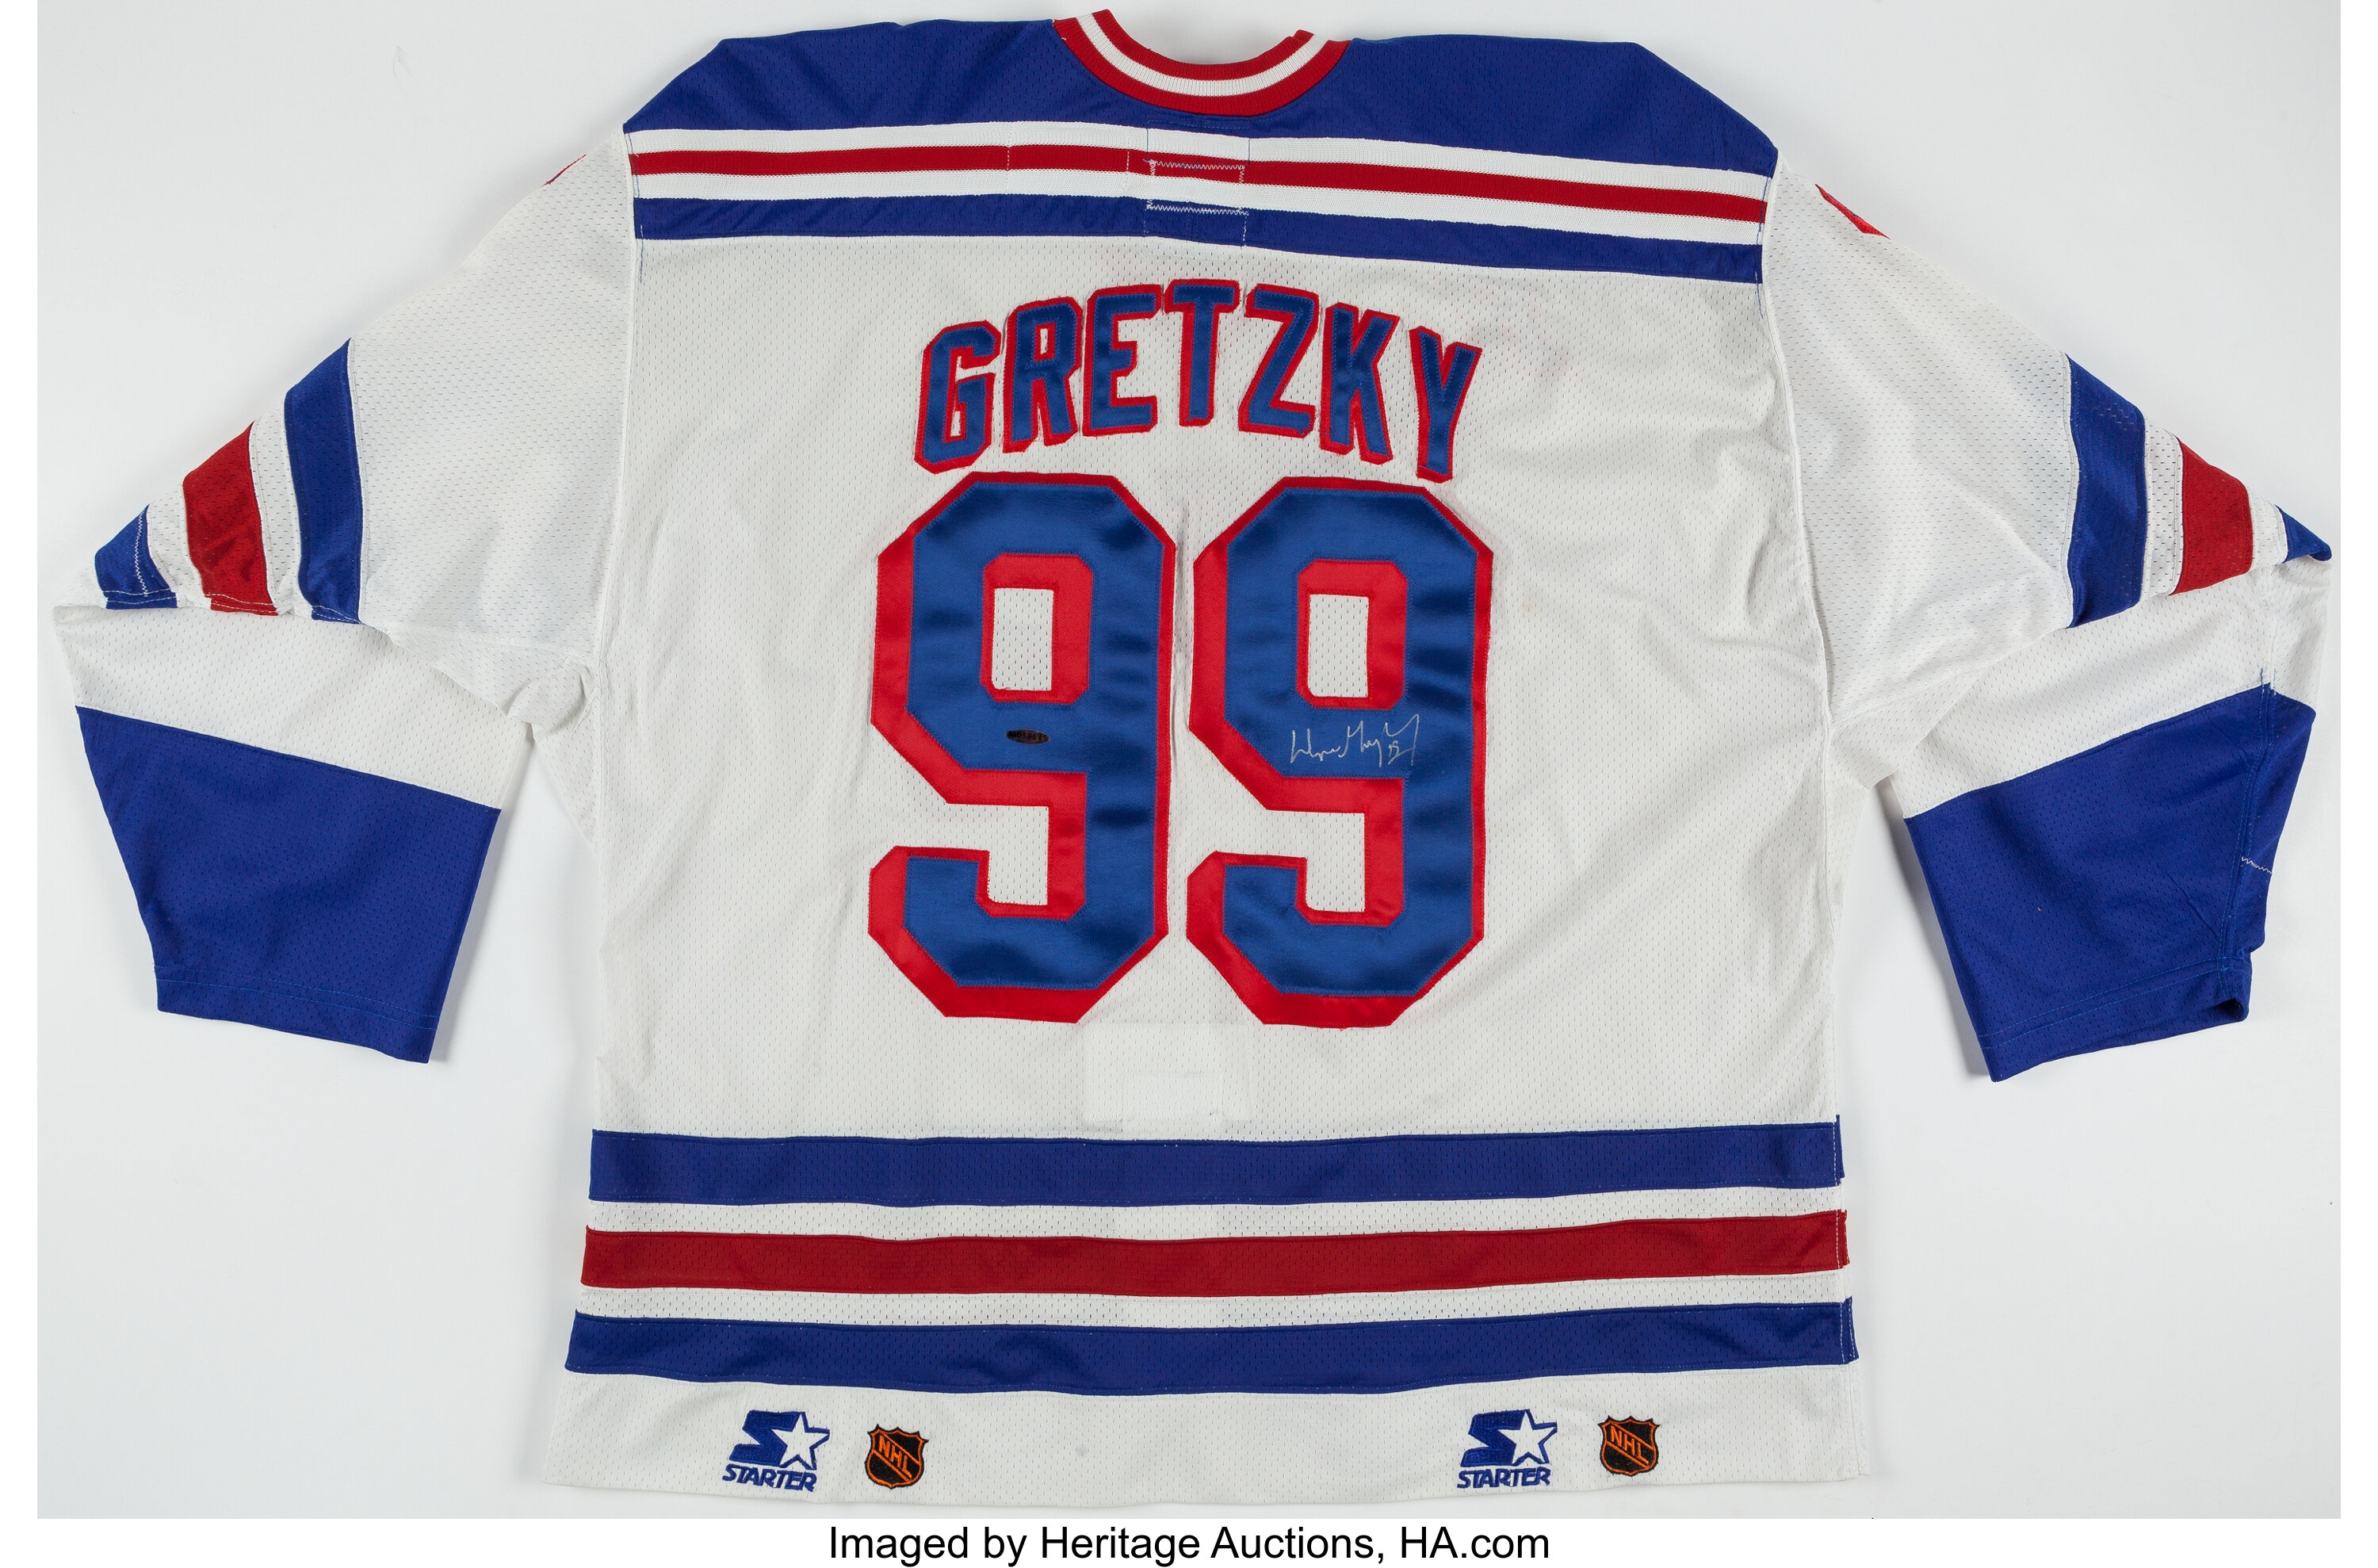 Wayne Gretzky Signed New York Rangers Game Jersey Upper Deck Uda Coa Auction